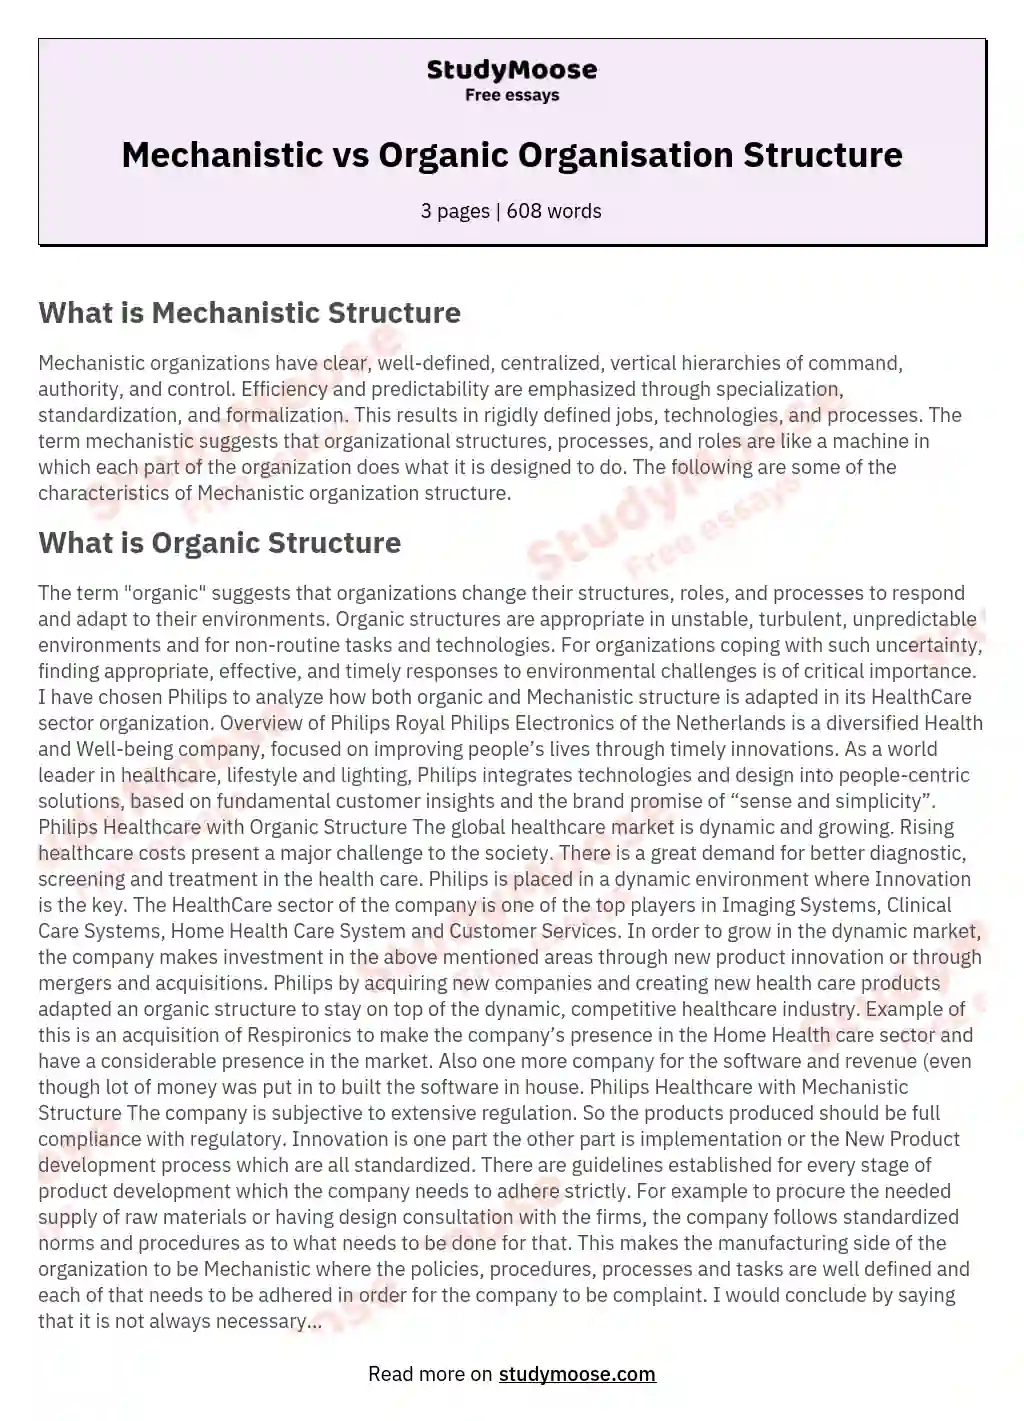 mechanistic and organic organizations